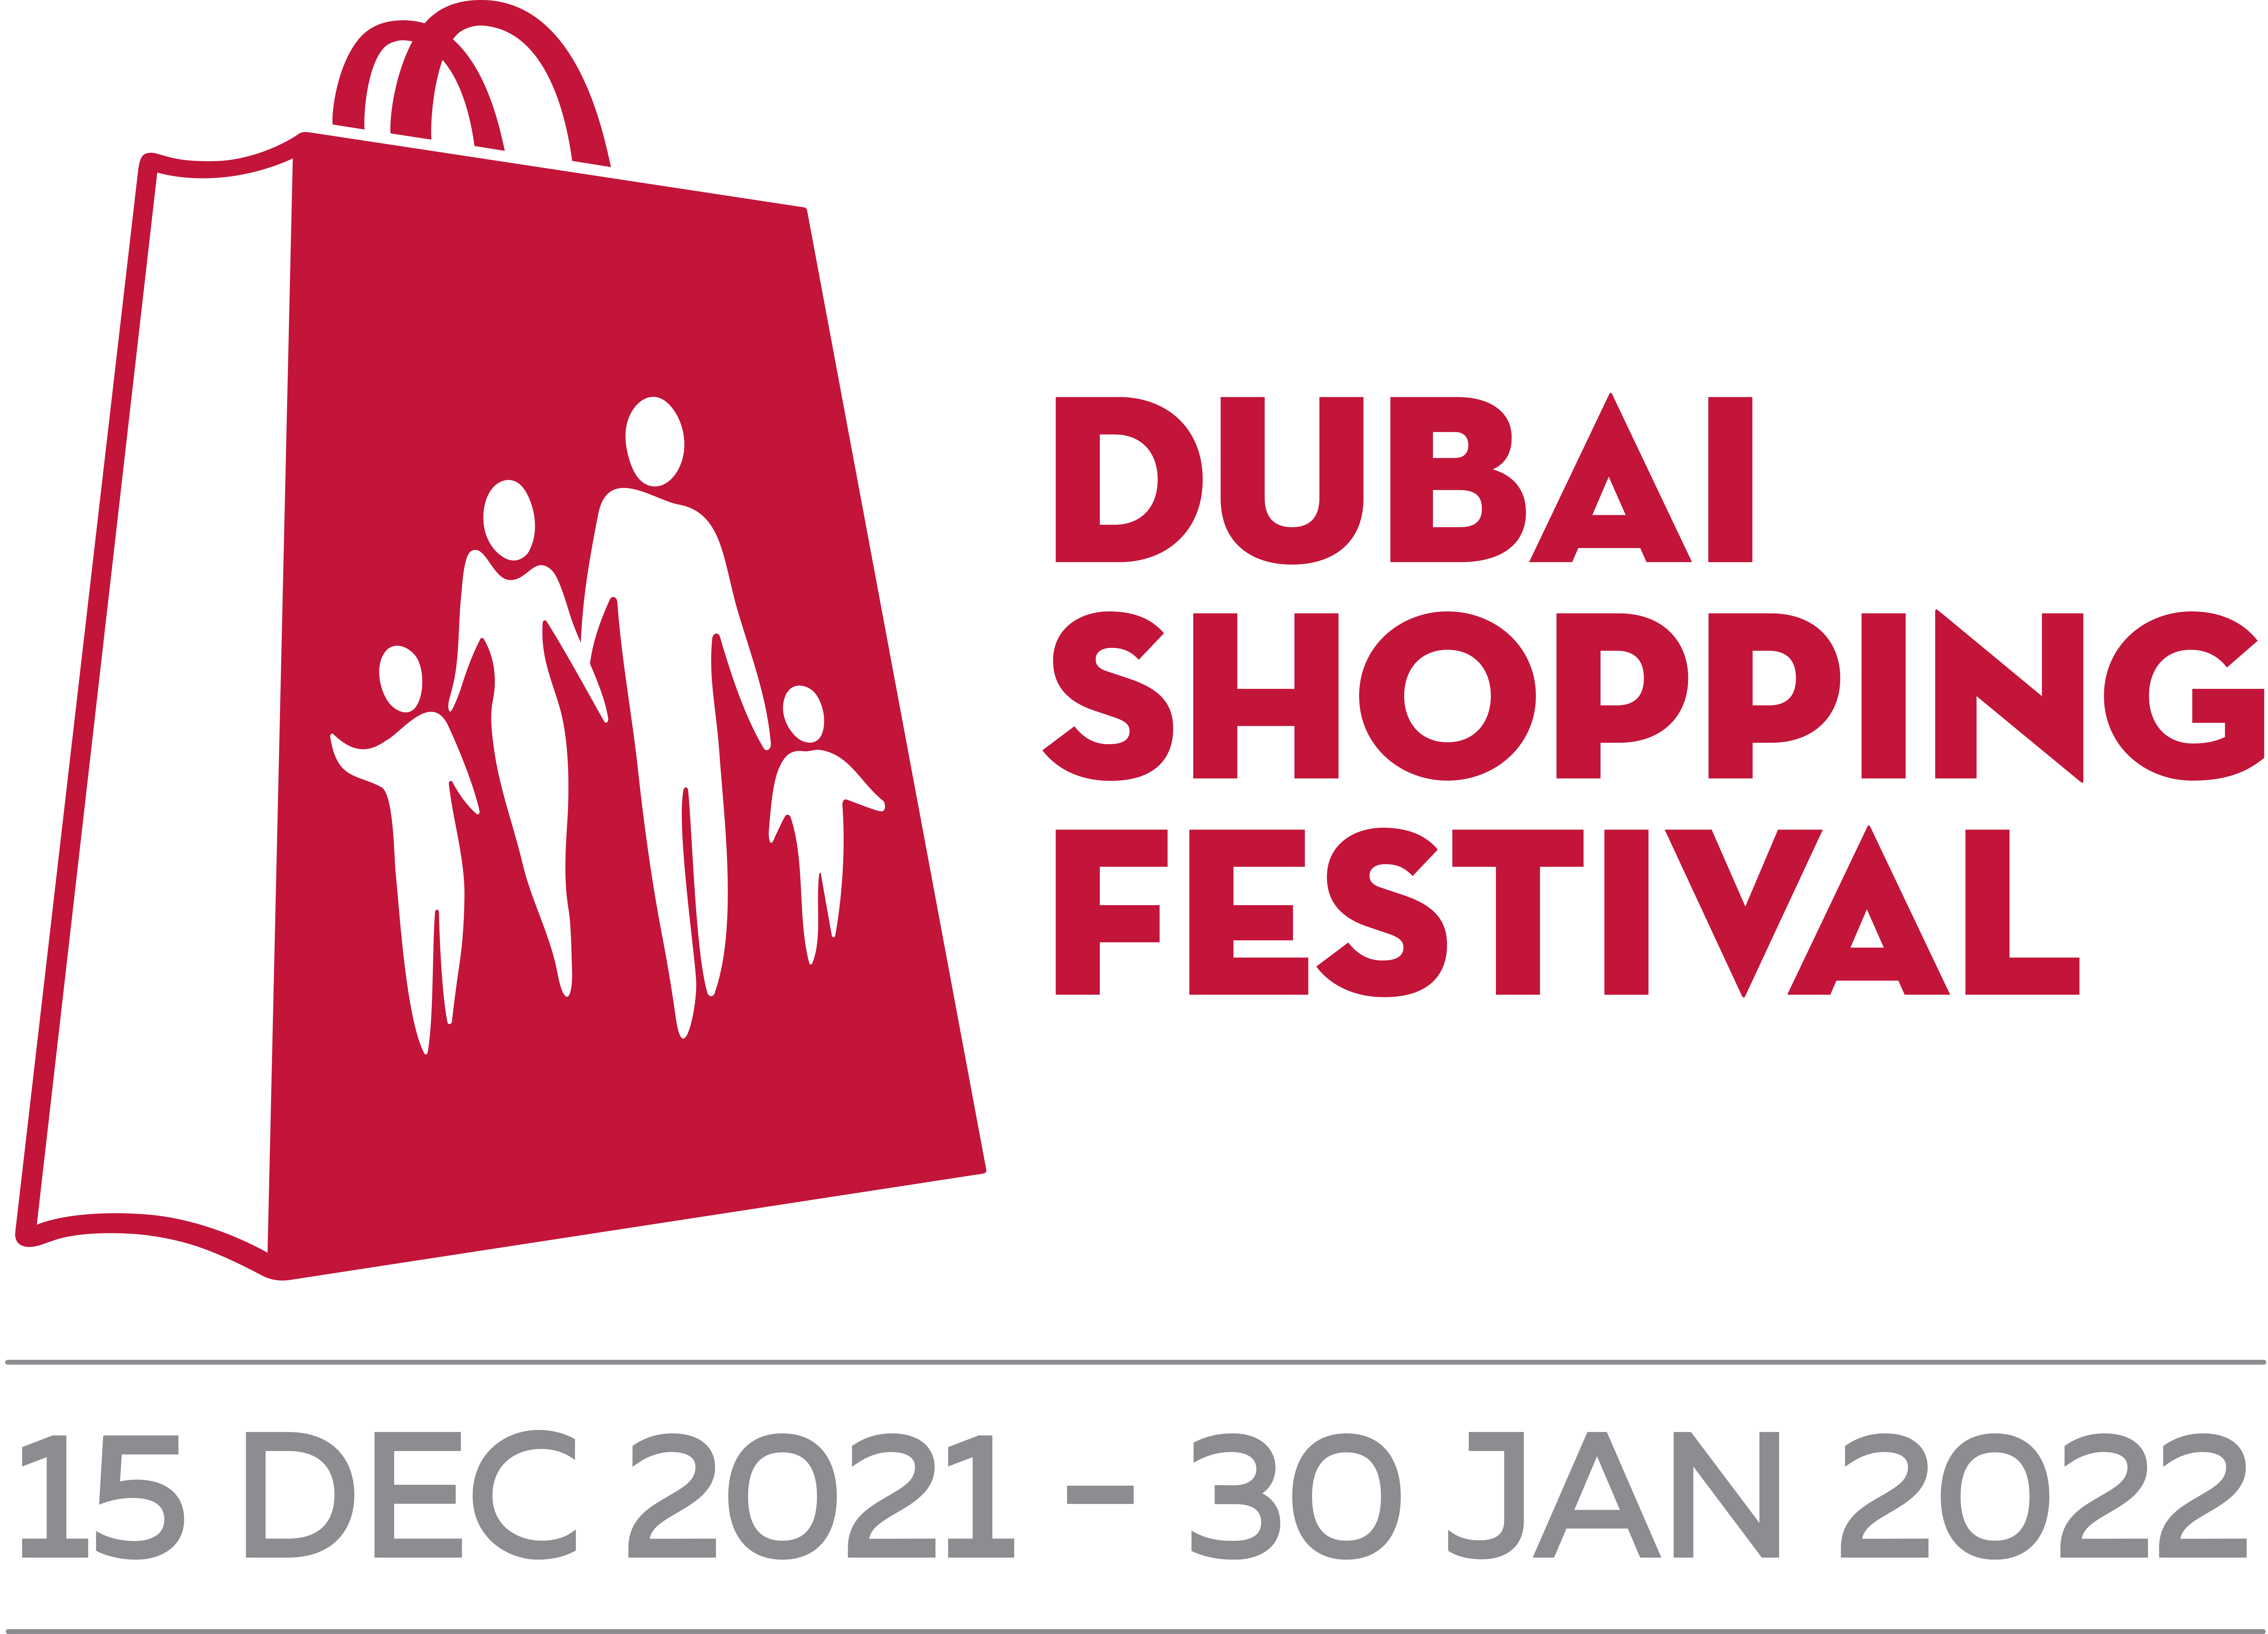 The dubai shopping festival